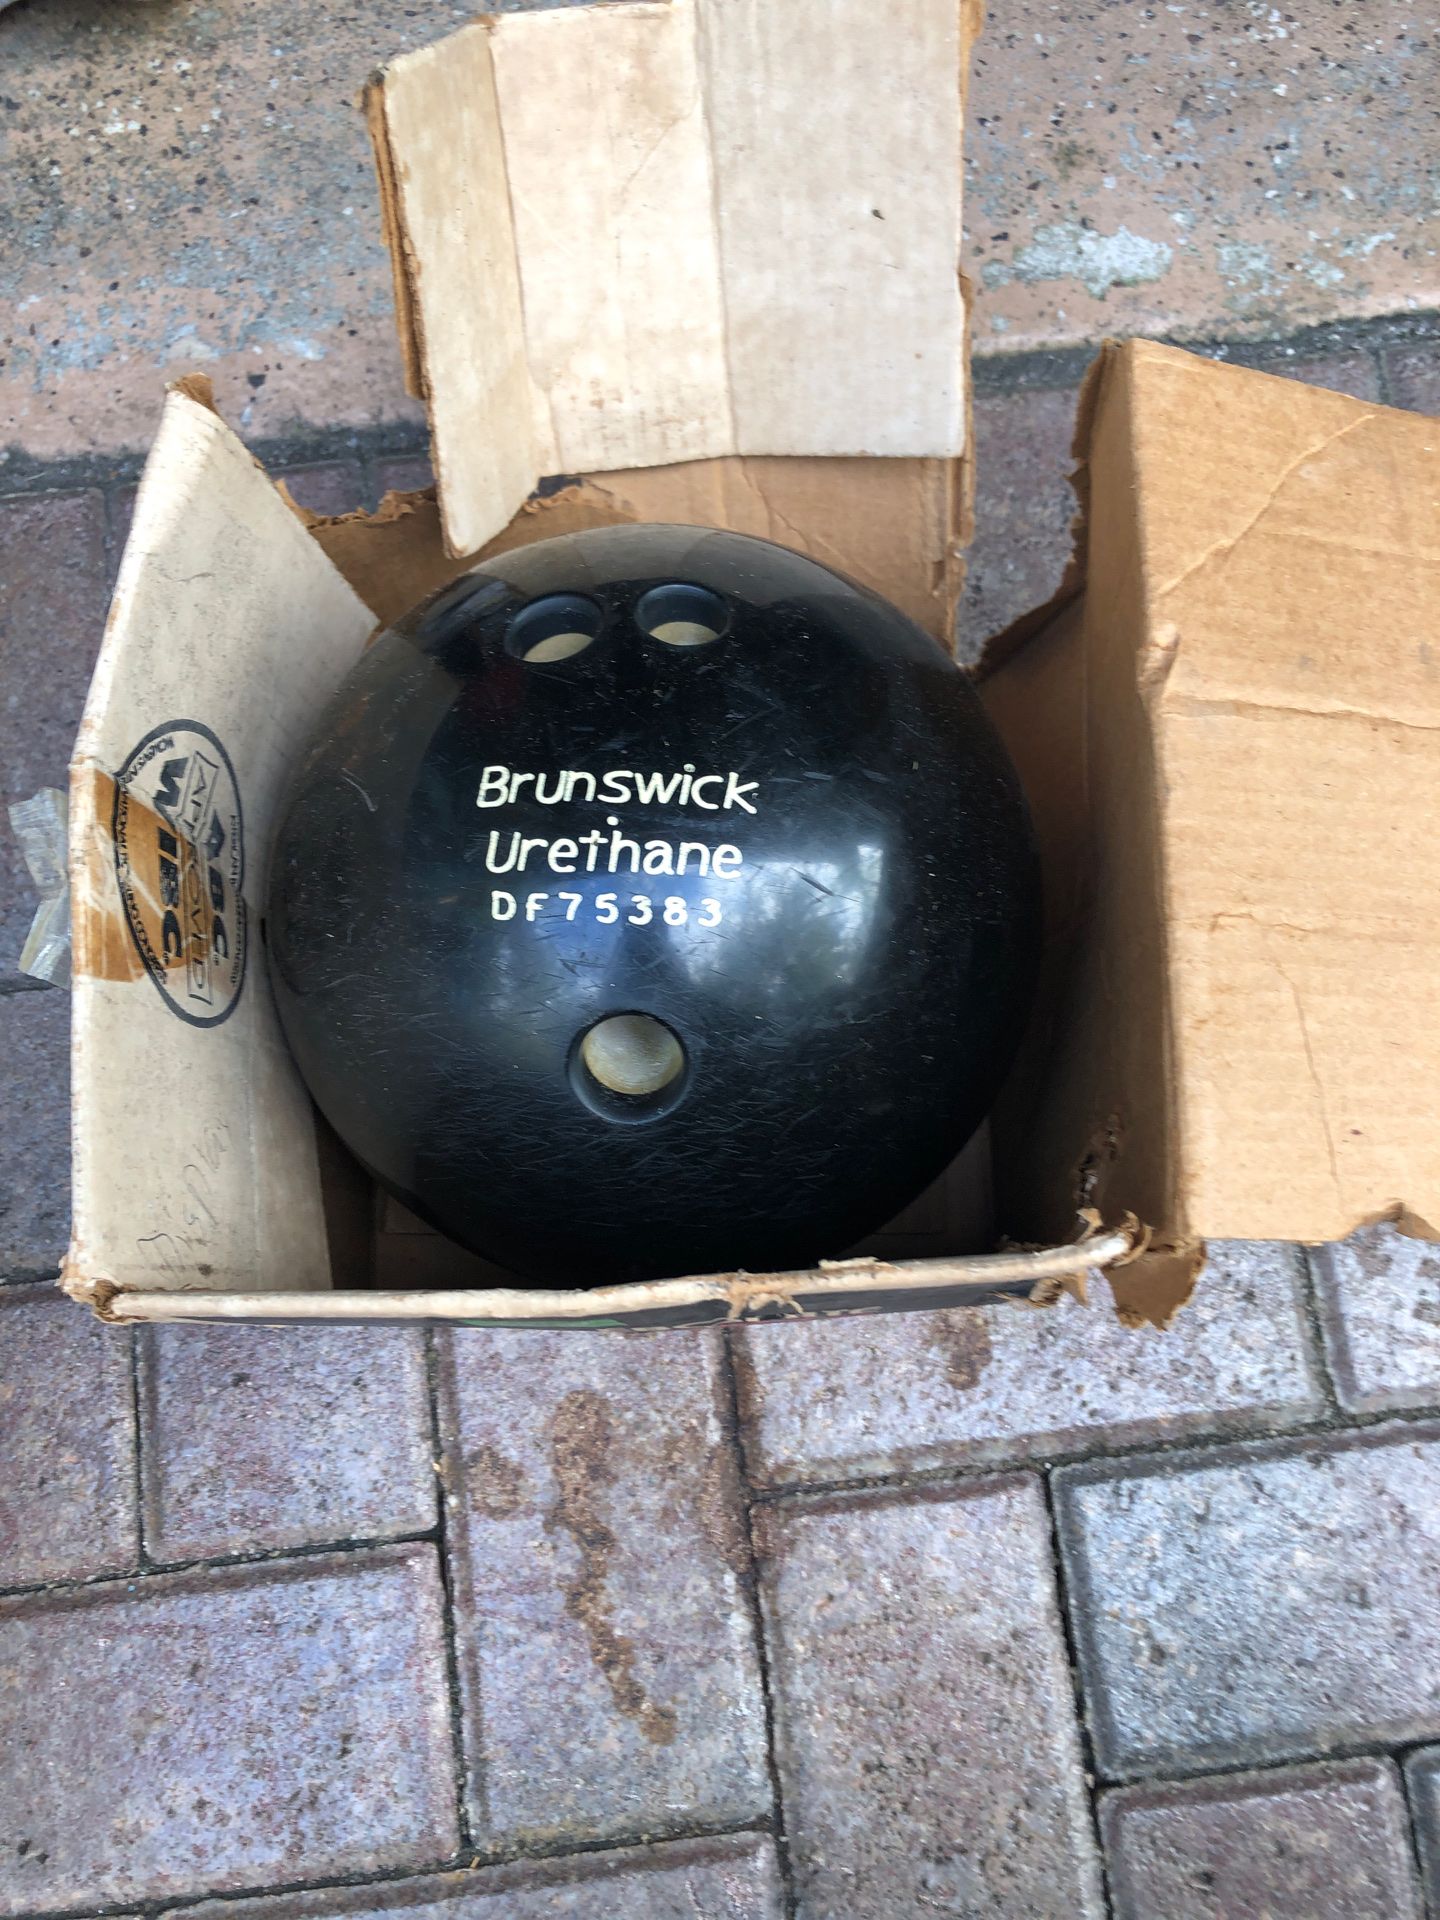 Brunswick bowling ball...raspberry pearl,...weight : 14 37 ... custom top weight 2 20...Urethane Ebonite brand